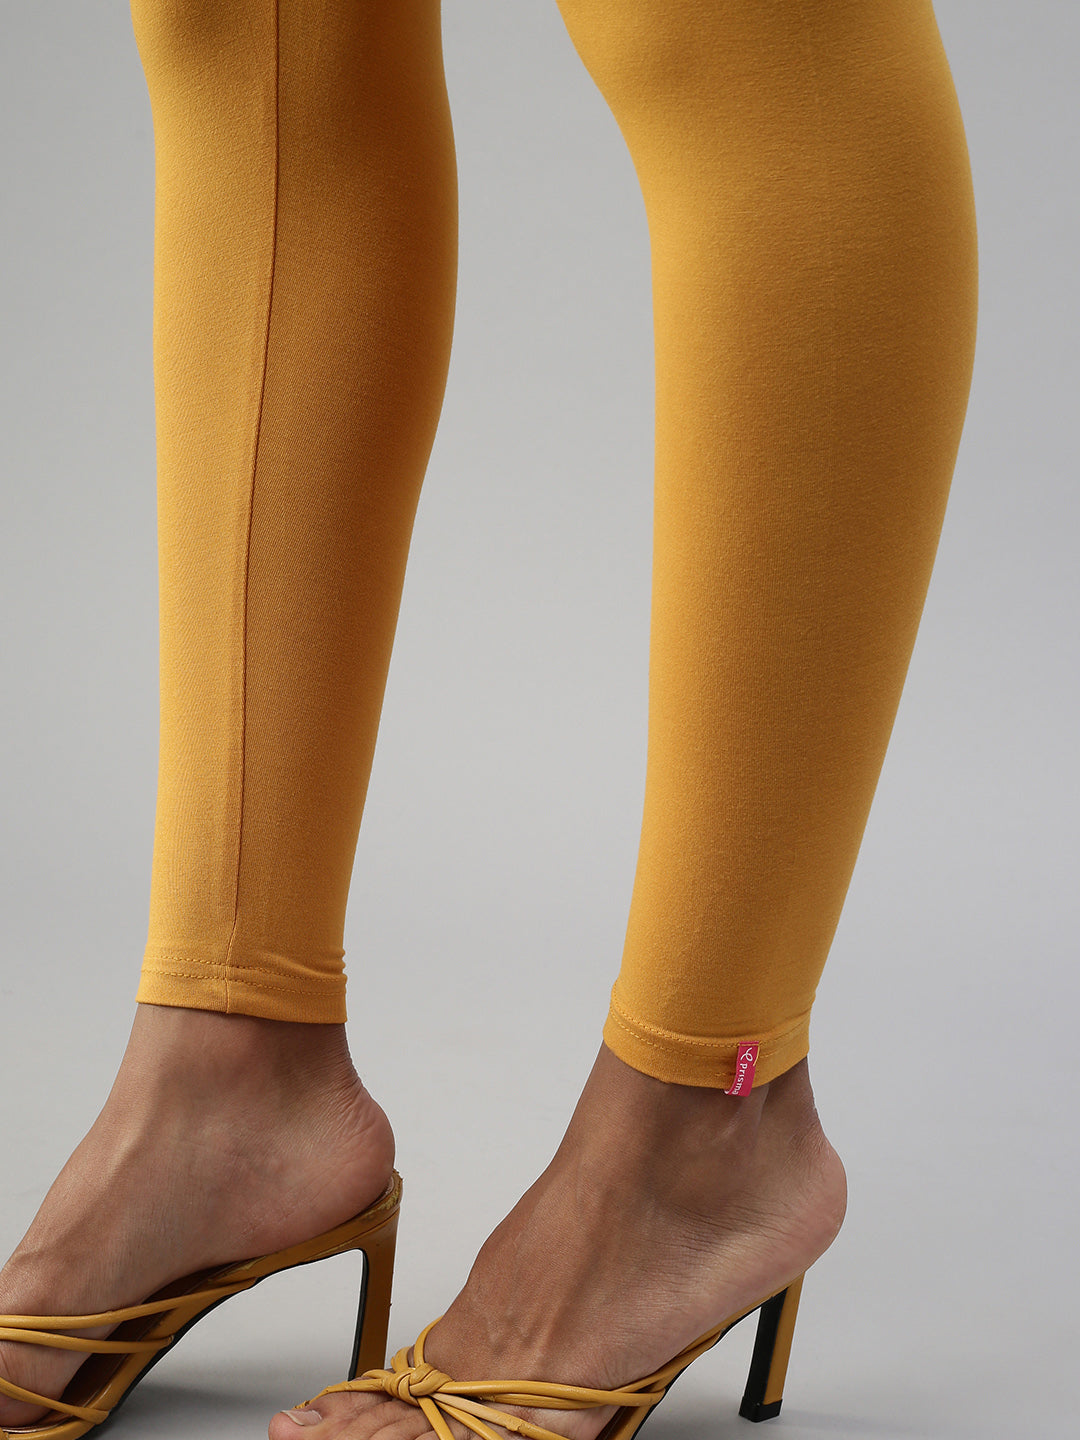 Shop Now Printed Leggings Designer Multicolor Ankle-Length Leggings – Lady  India